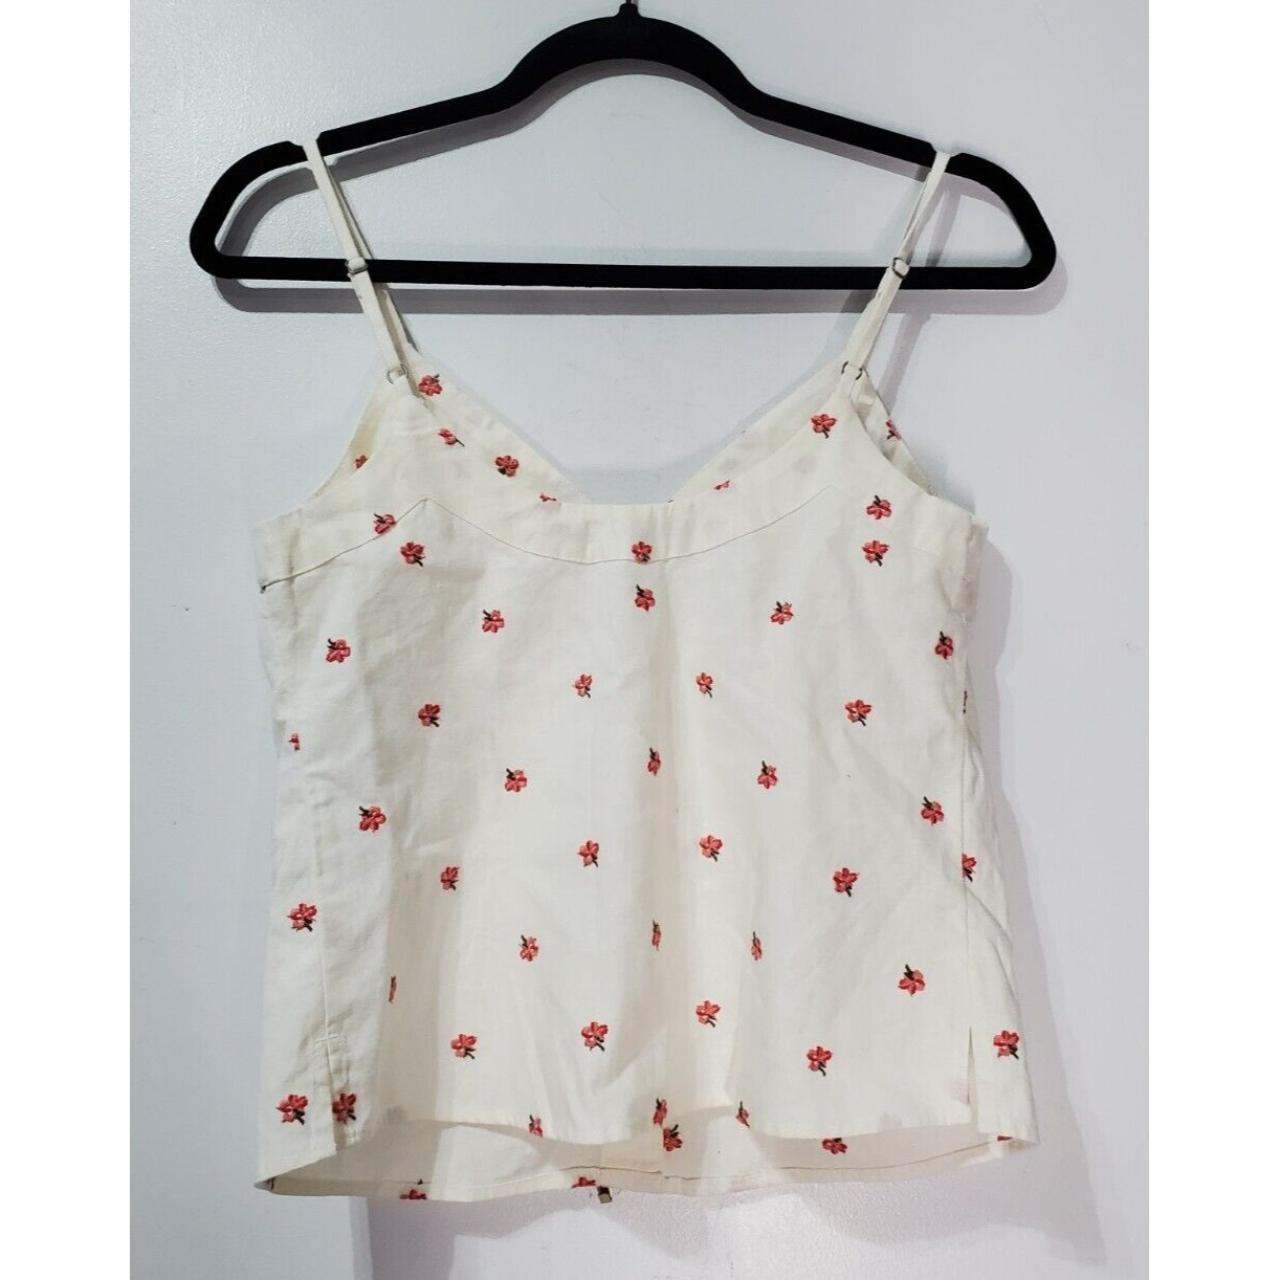 Abercrombie & Fitch Women's Vests-tanks-camis (4)